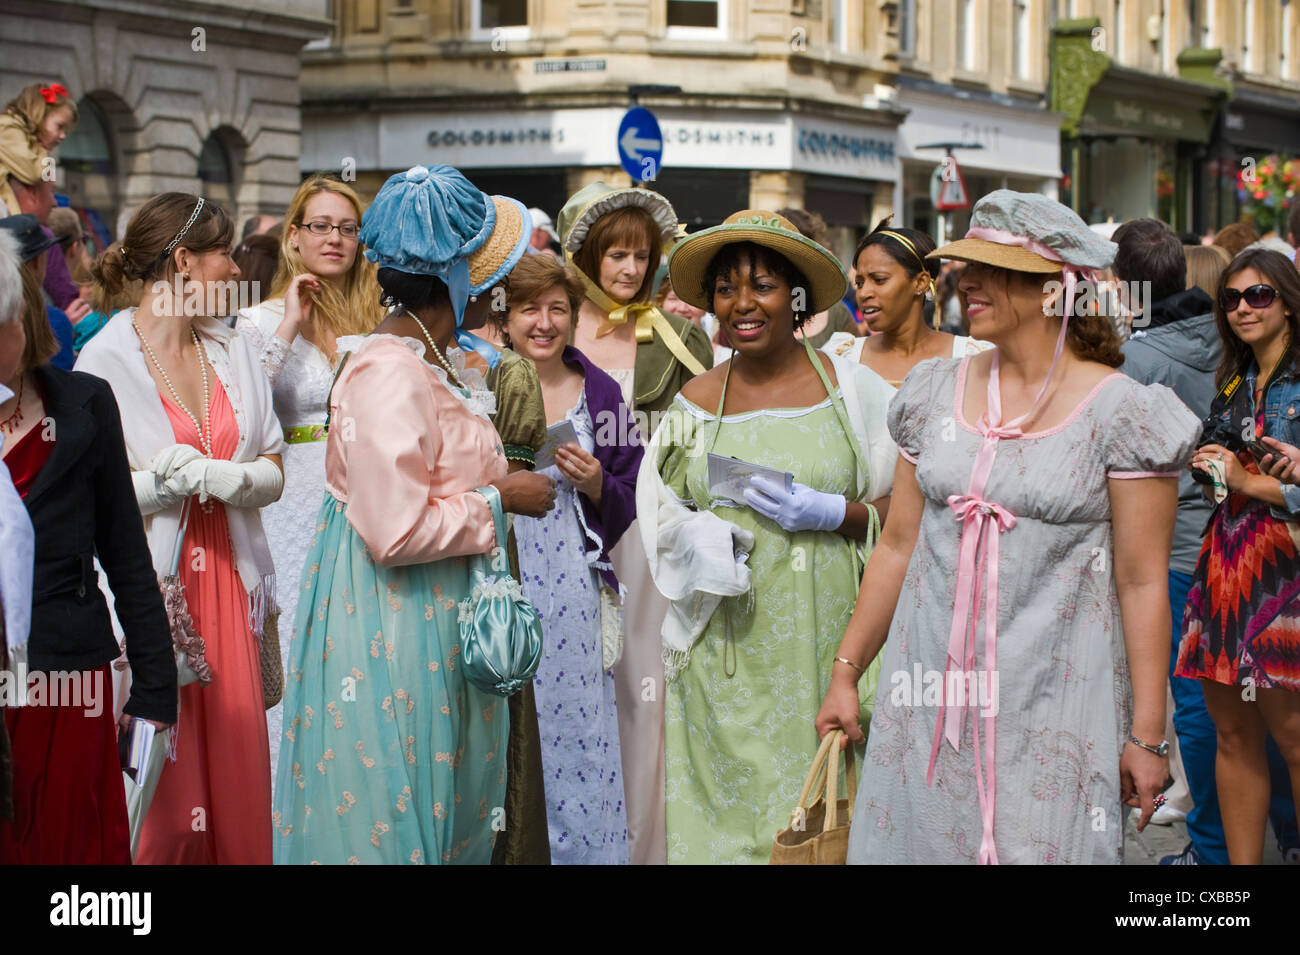 Ladies in Regency costume promenade through Bath city centre during the 2012 Jane Austen Festival Stock Photo